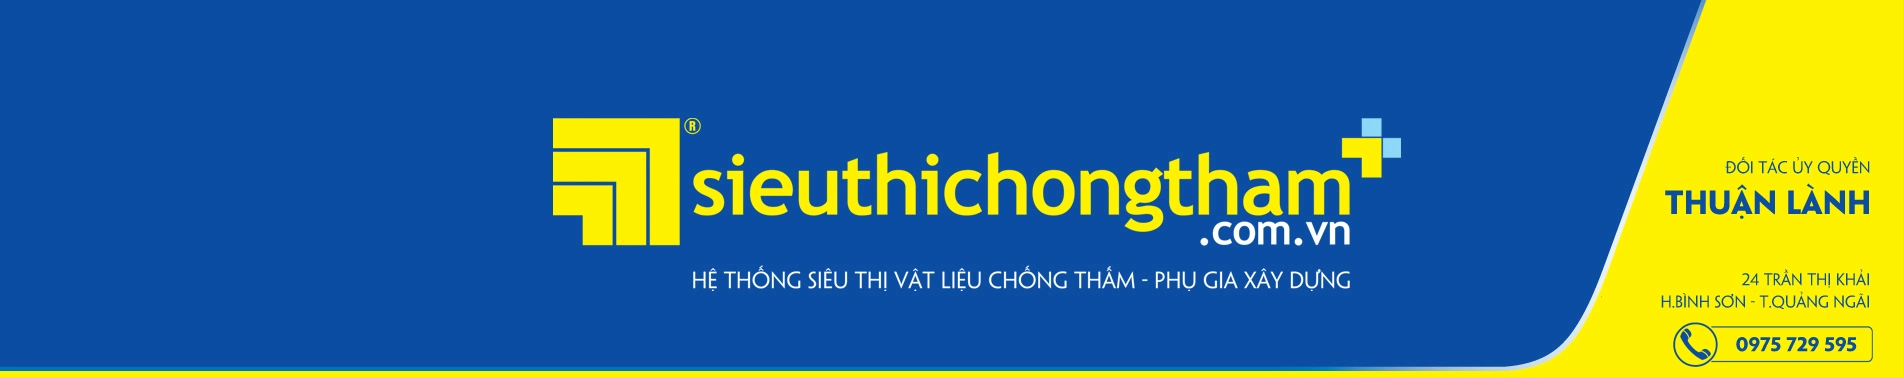 Thuan Lanh Banner